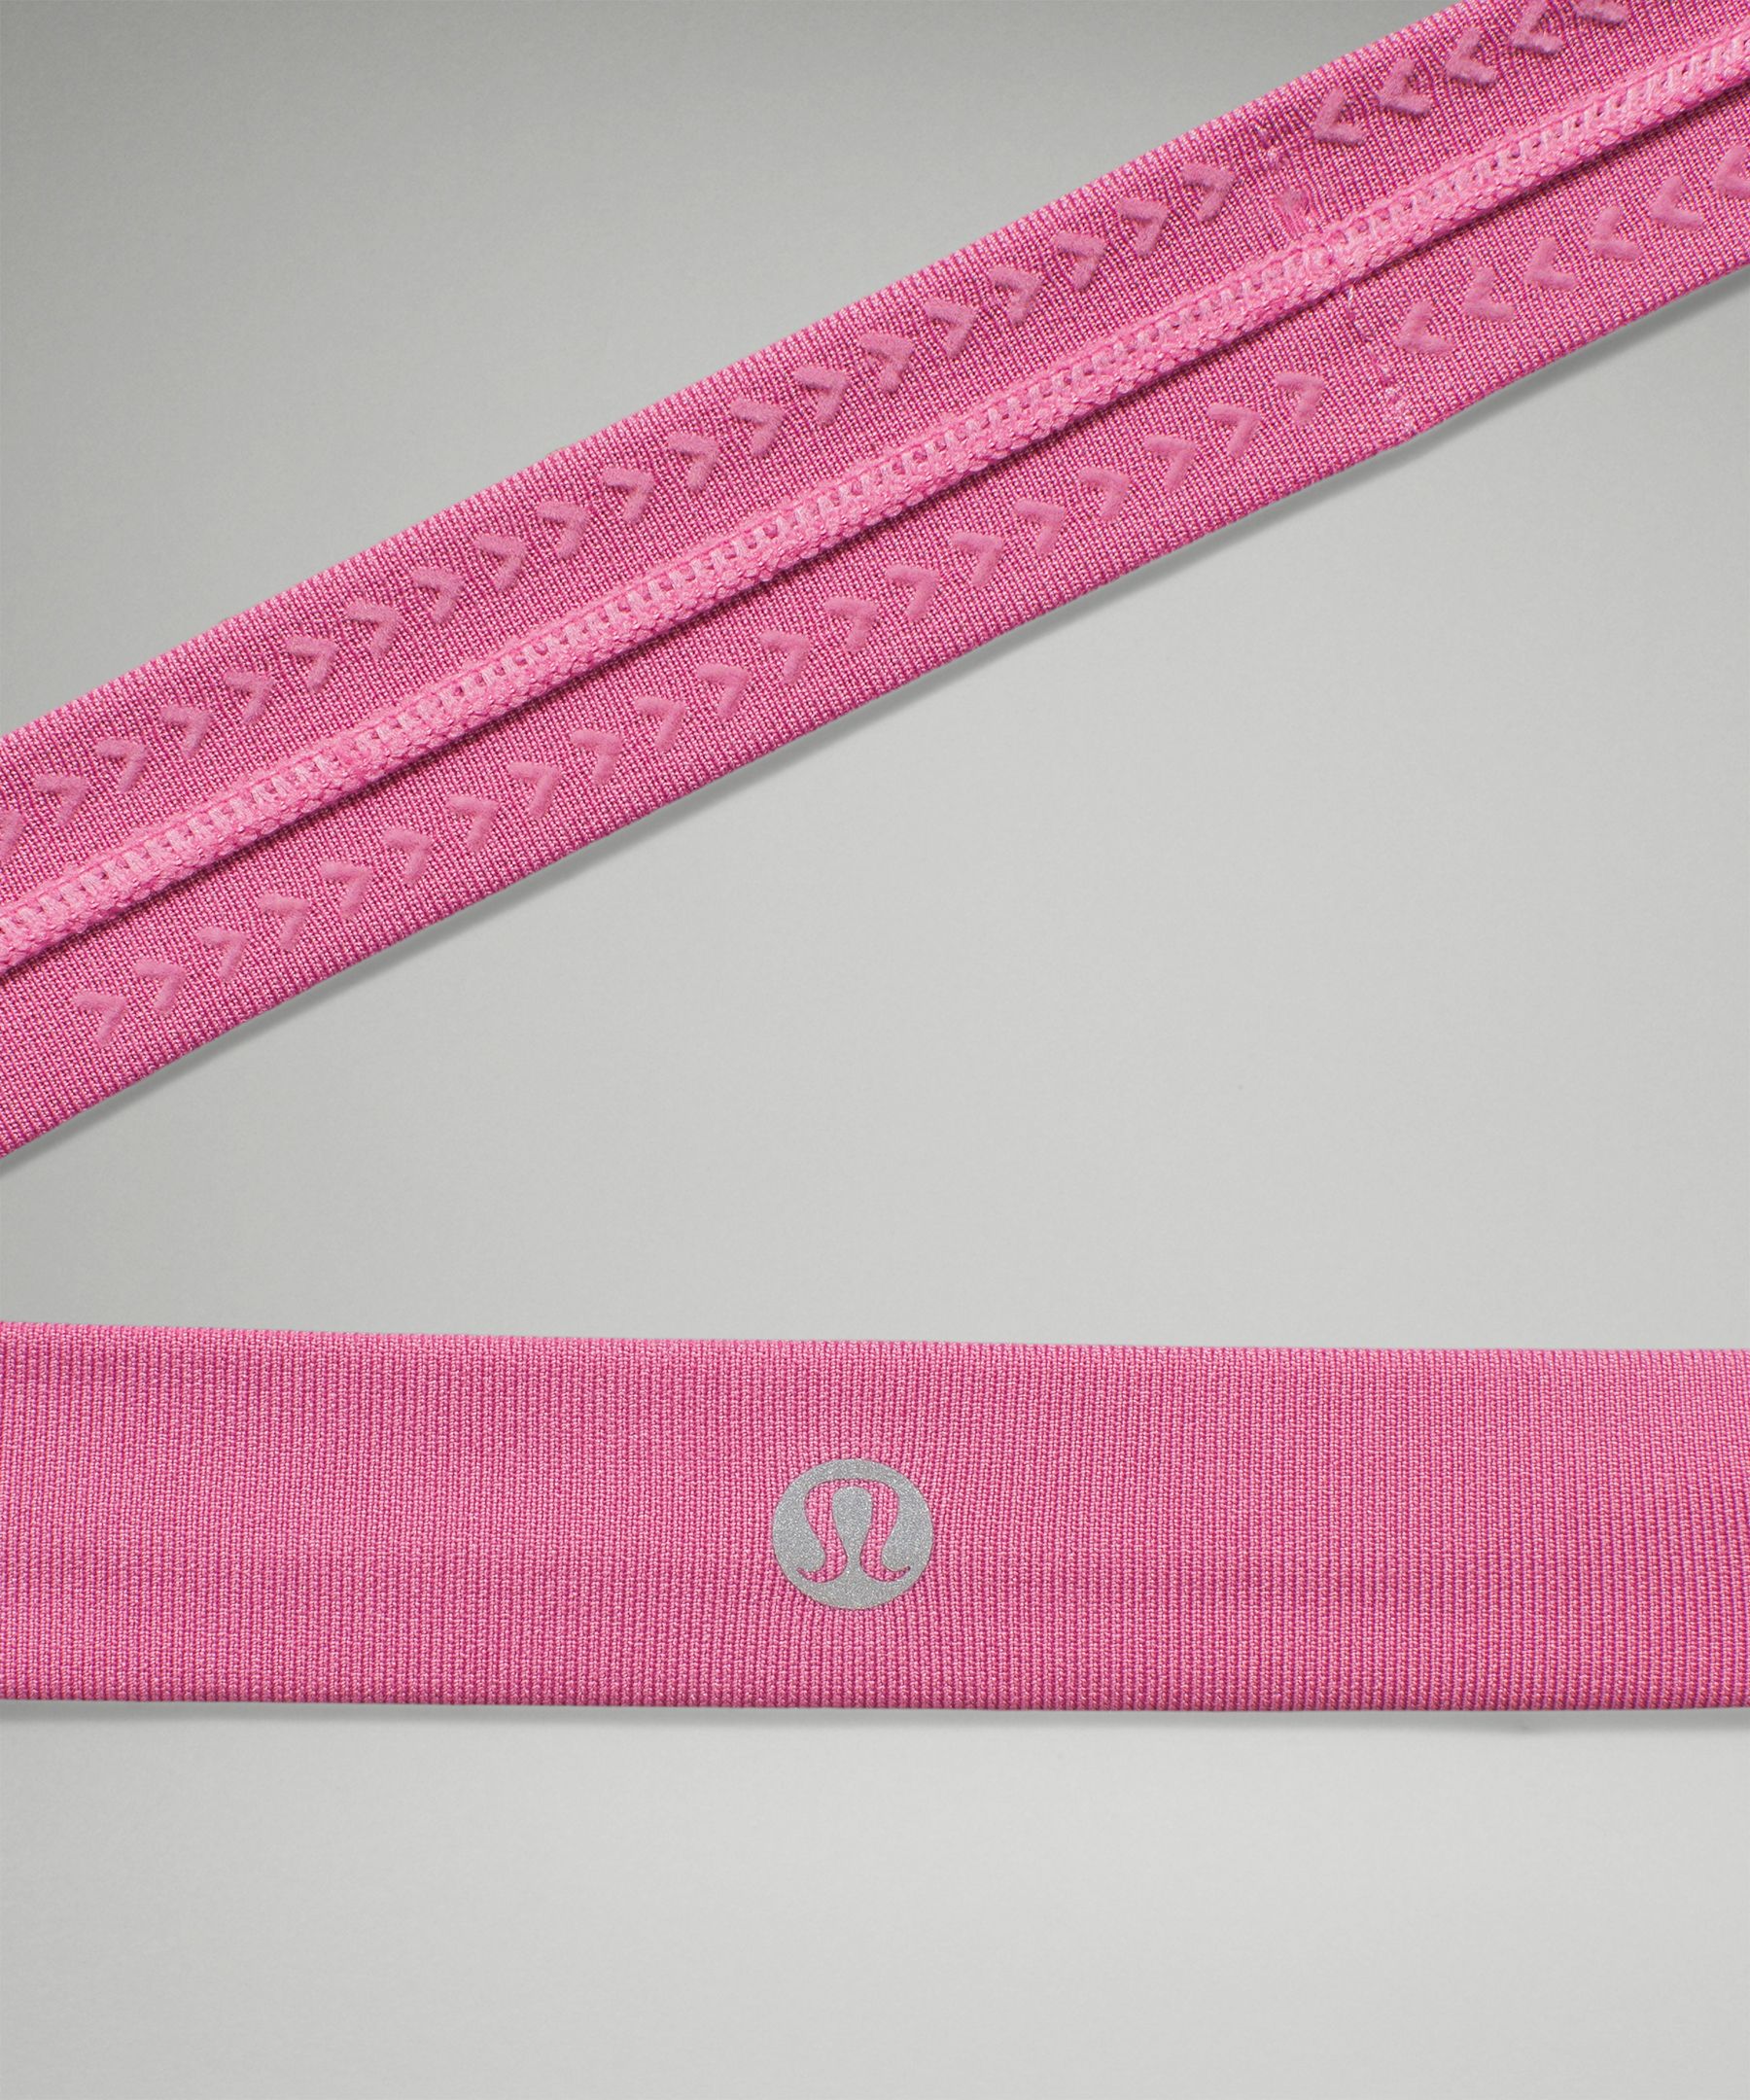 Lululemon Cardio Cross Trainer Headband In Pink Blossom/pink Blossom